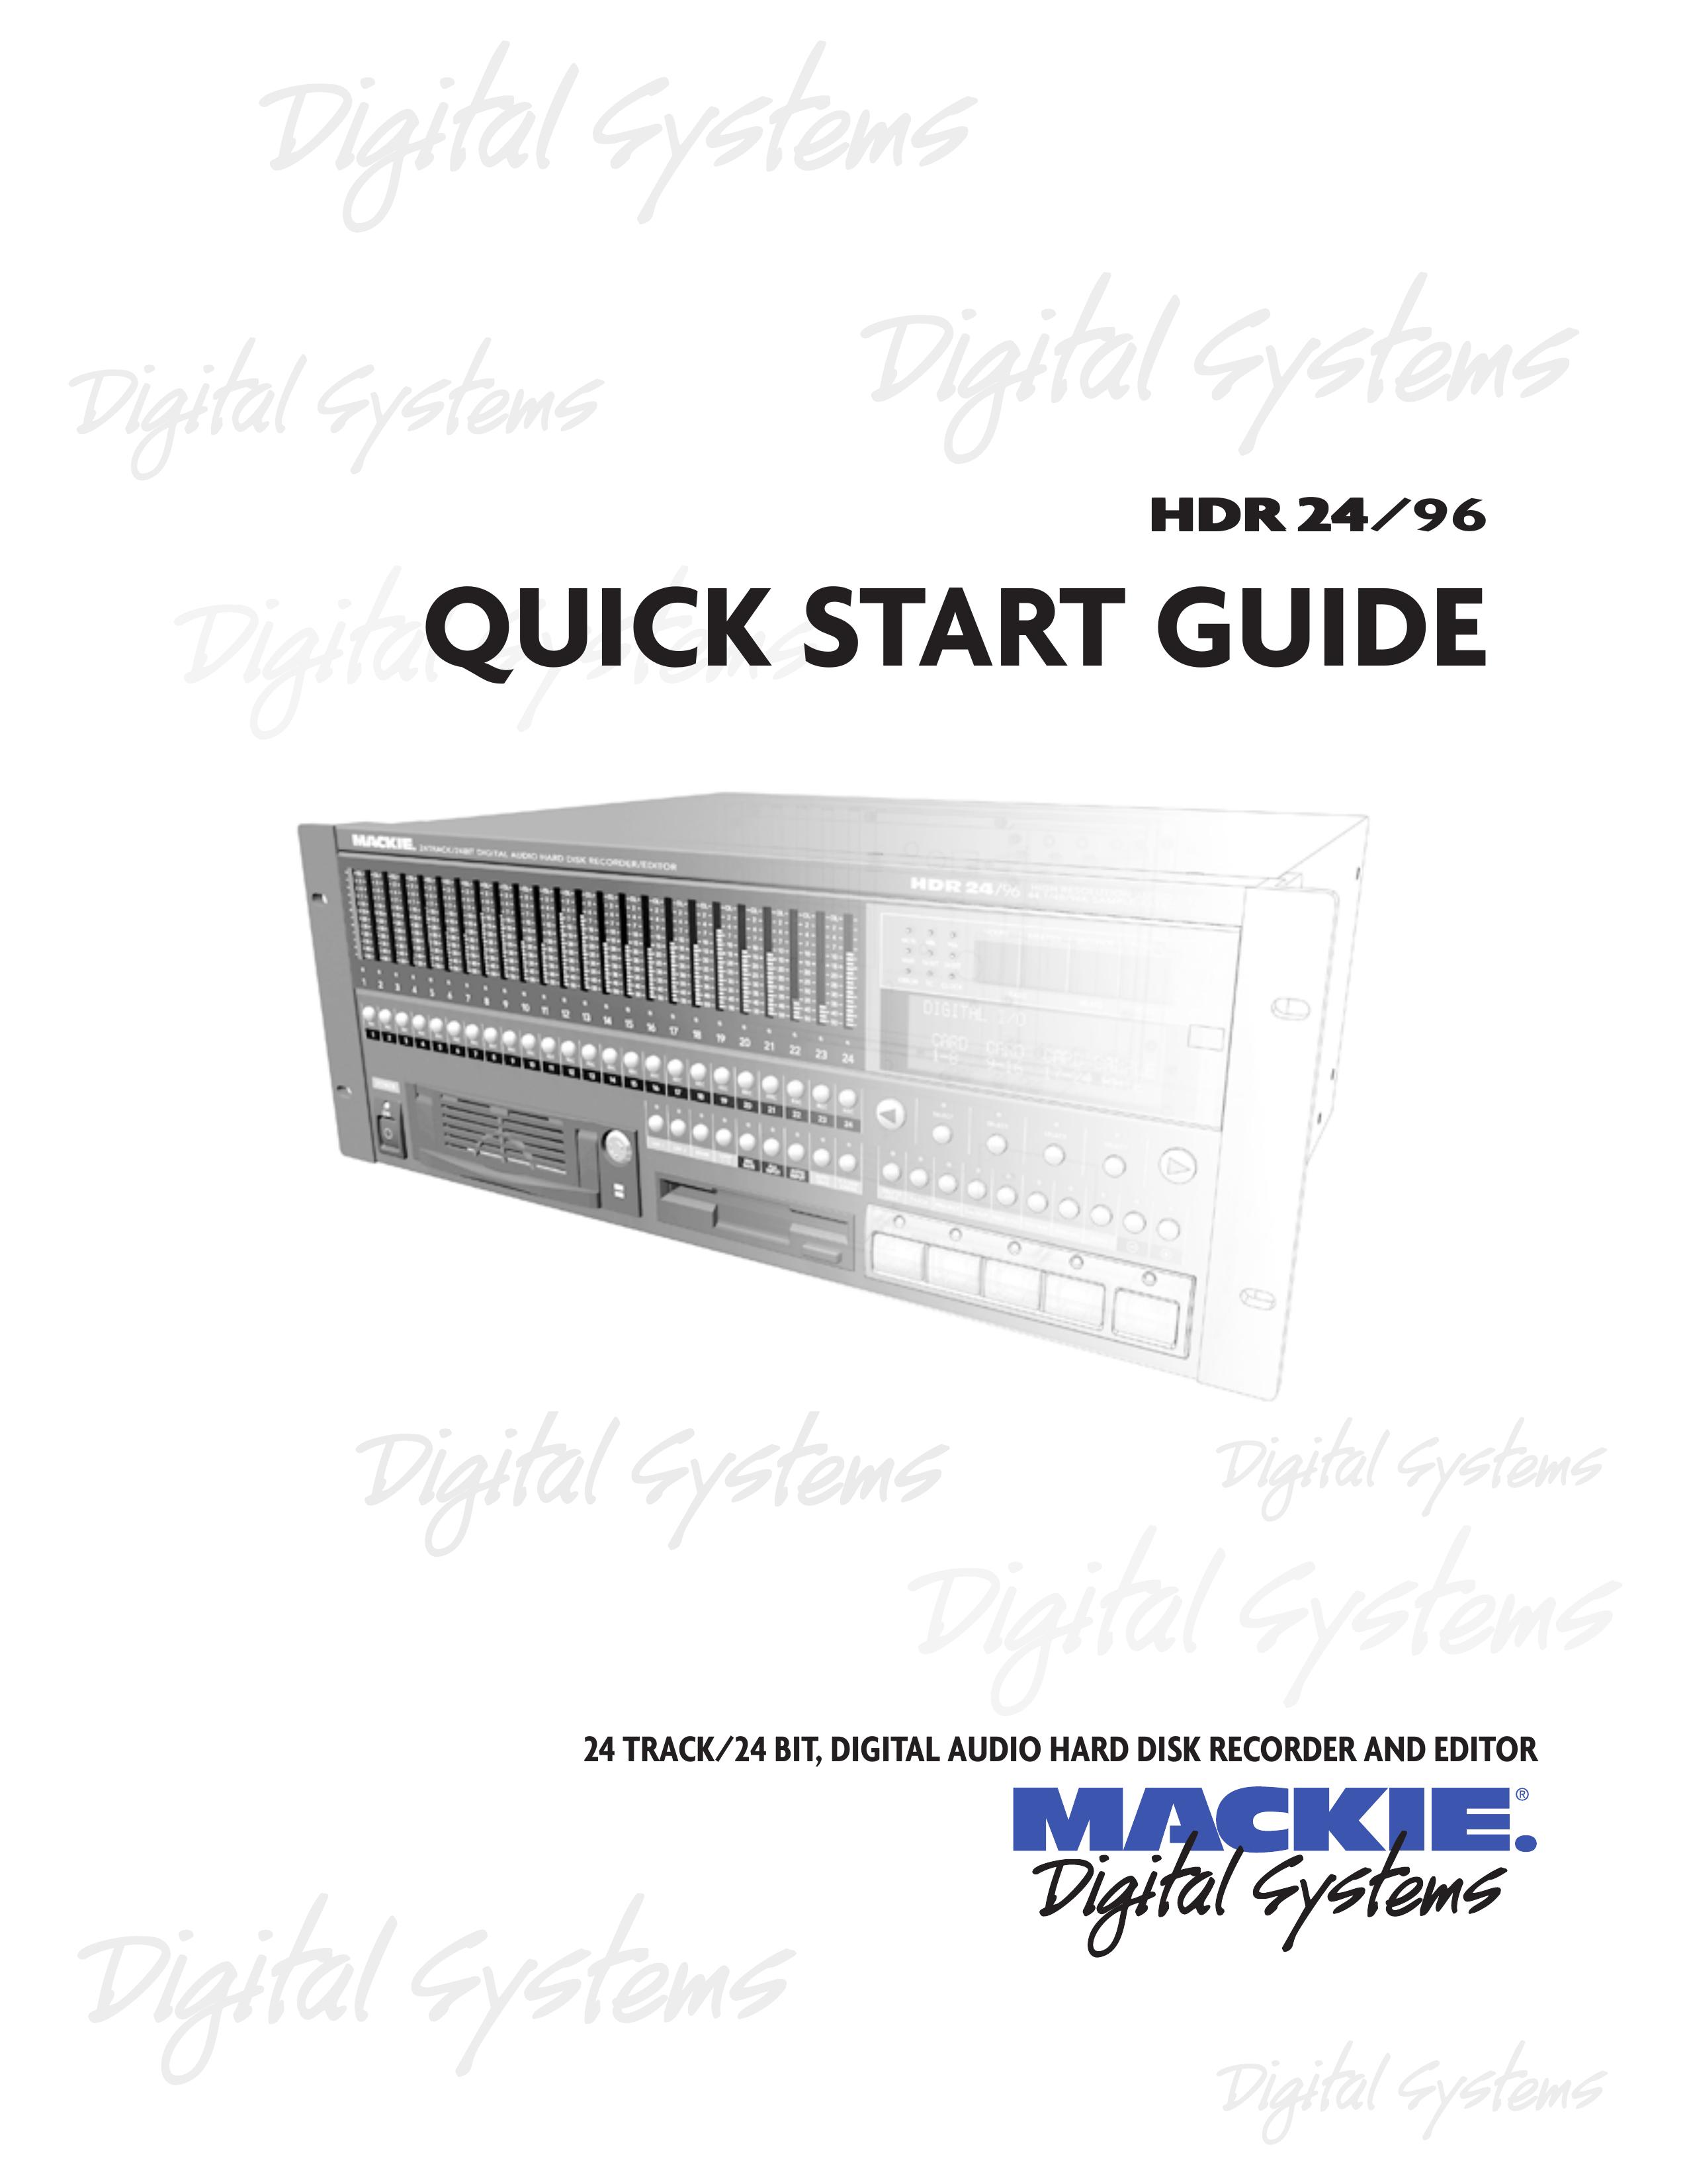 Mackie HDR 24/96 Camcorder User Manual